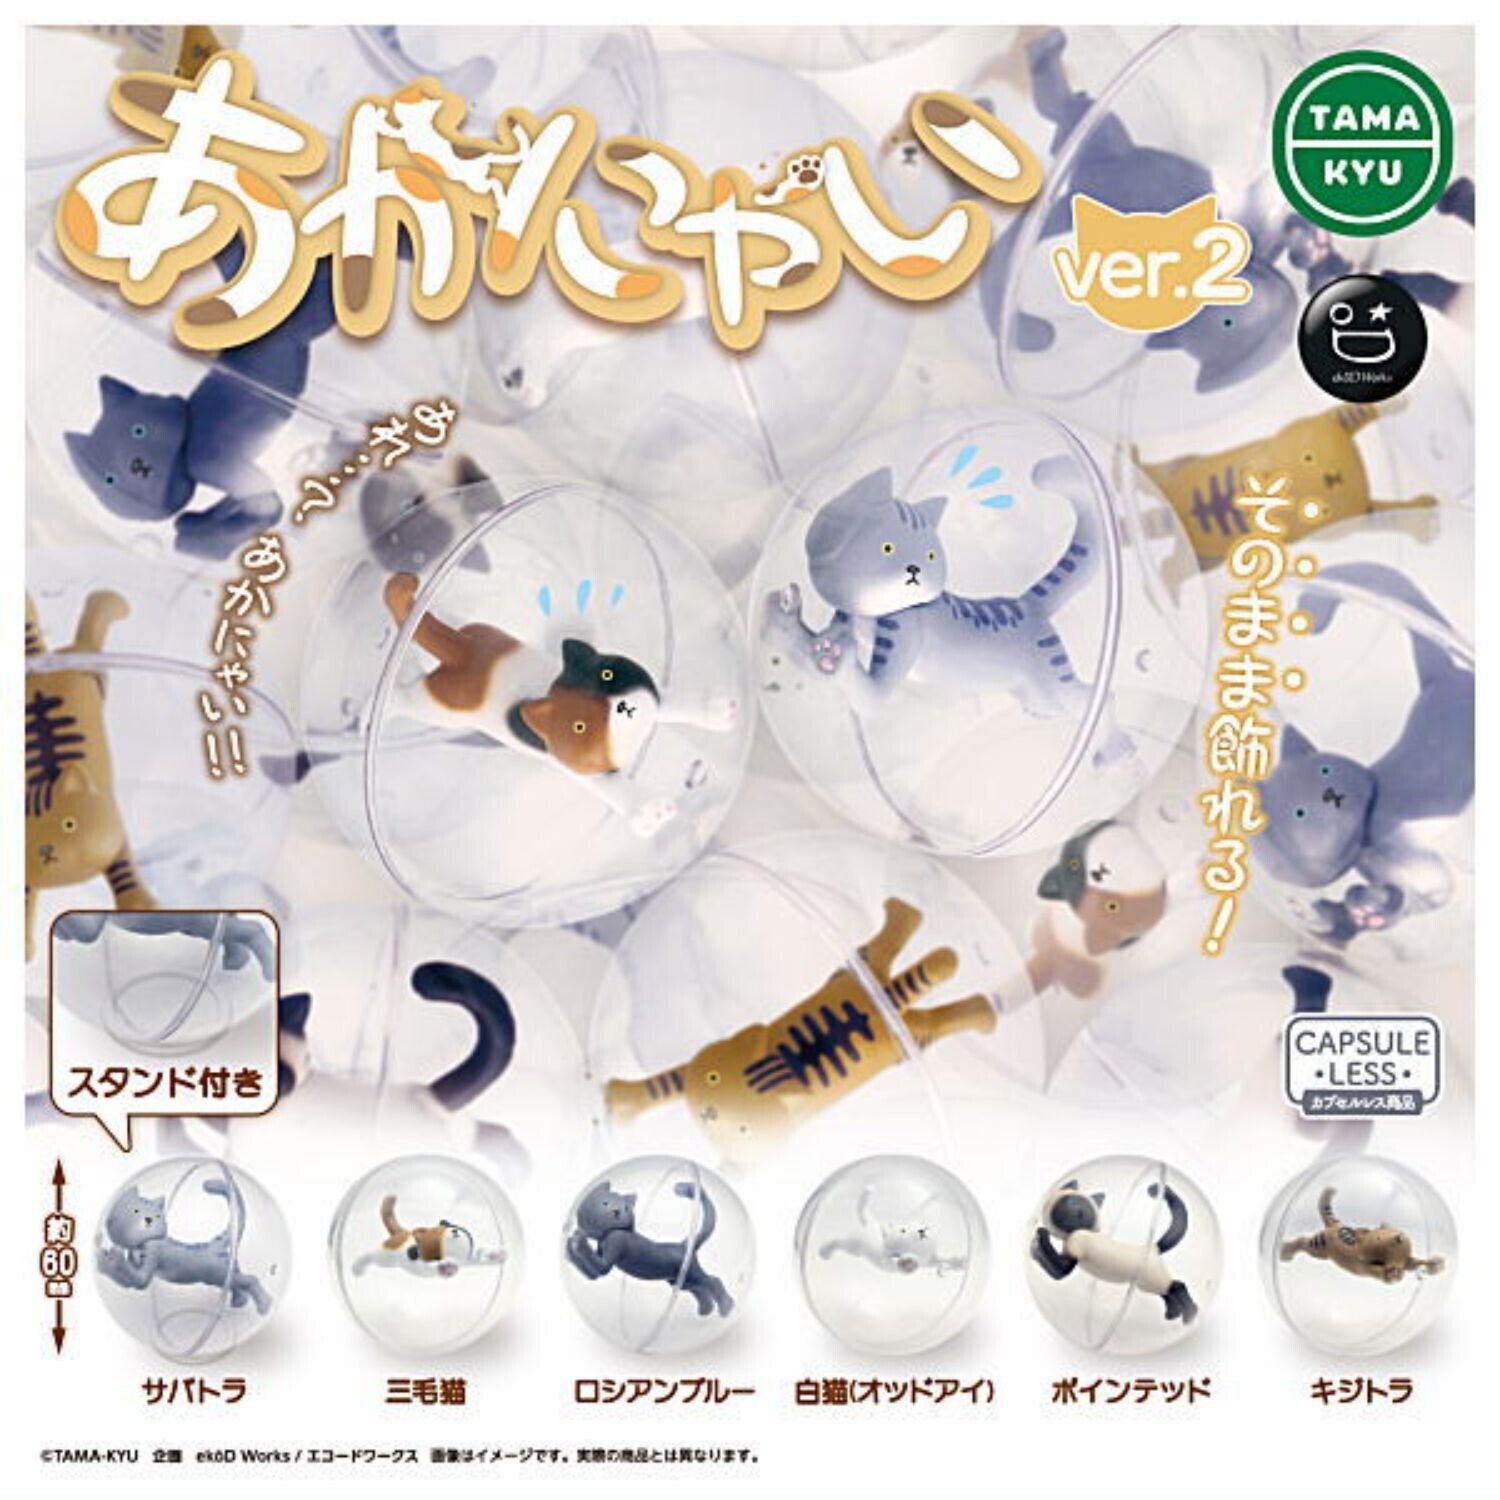 TAMA-KYU Akanyai Cat Figure Mascot Capsule Toy 6 Types Full Comp Set Gacha New